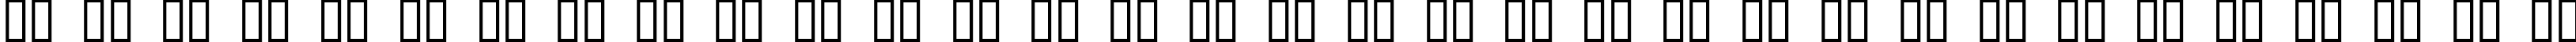 Пример написания русского алфавита шрифтом Blue Mutant Double Serif